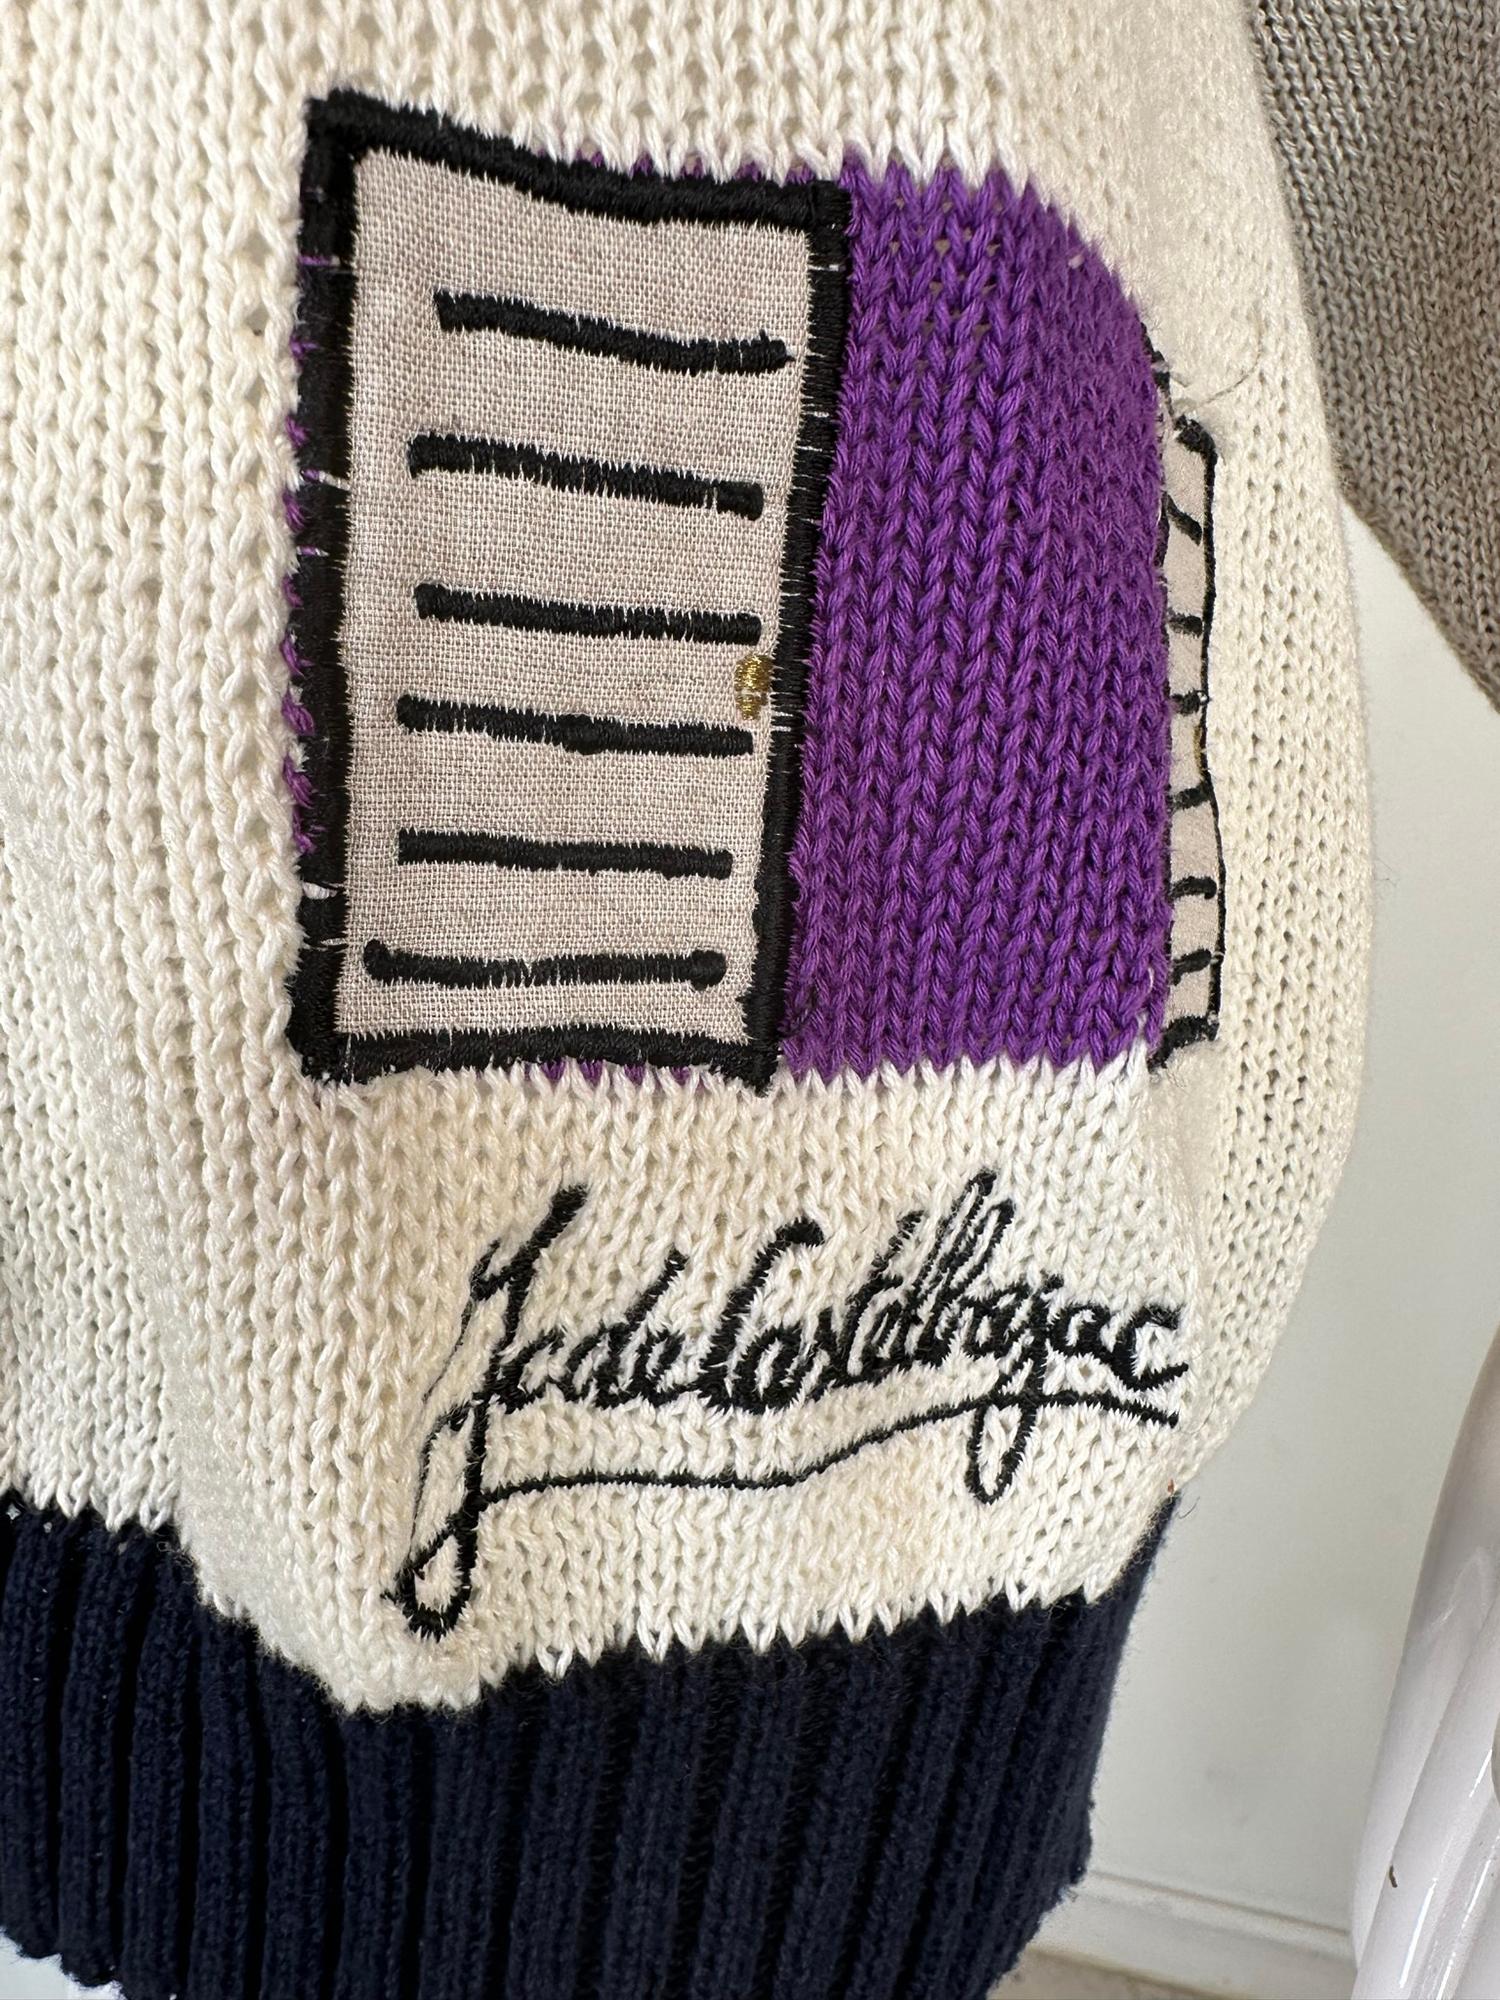 Jean-Charles de Castelbajac Linen Knit Applique Charming House with Cat Sweater  For Sale 5